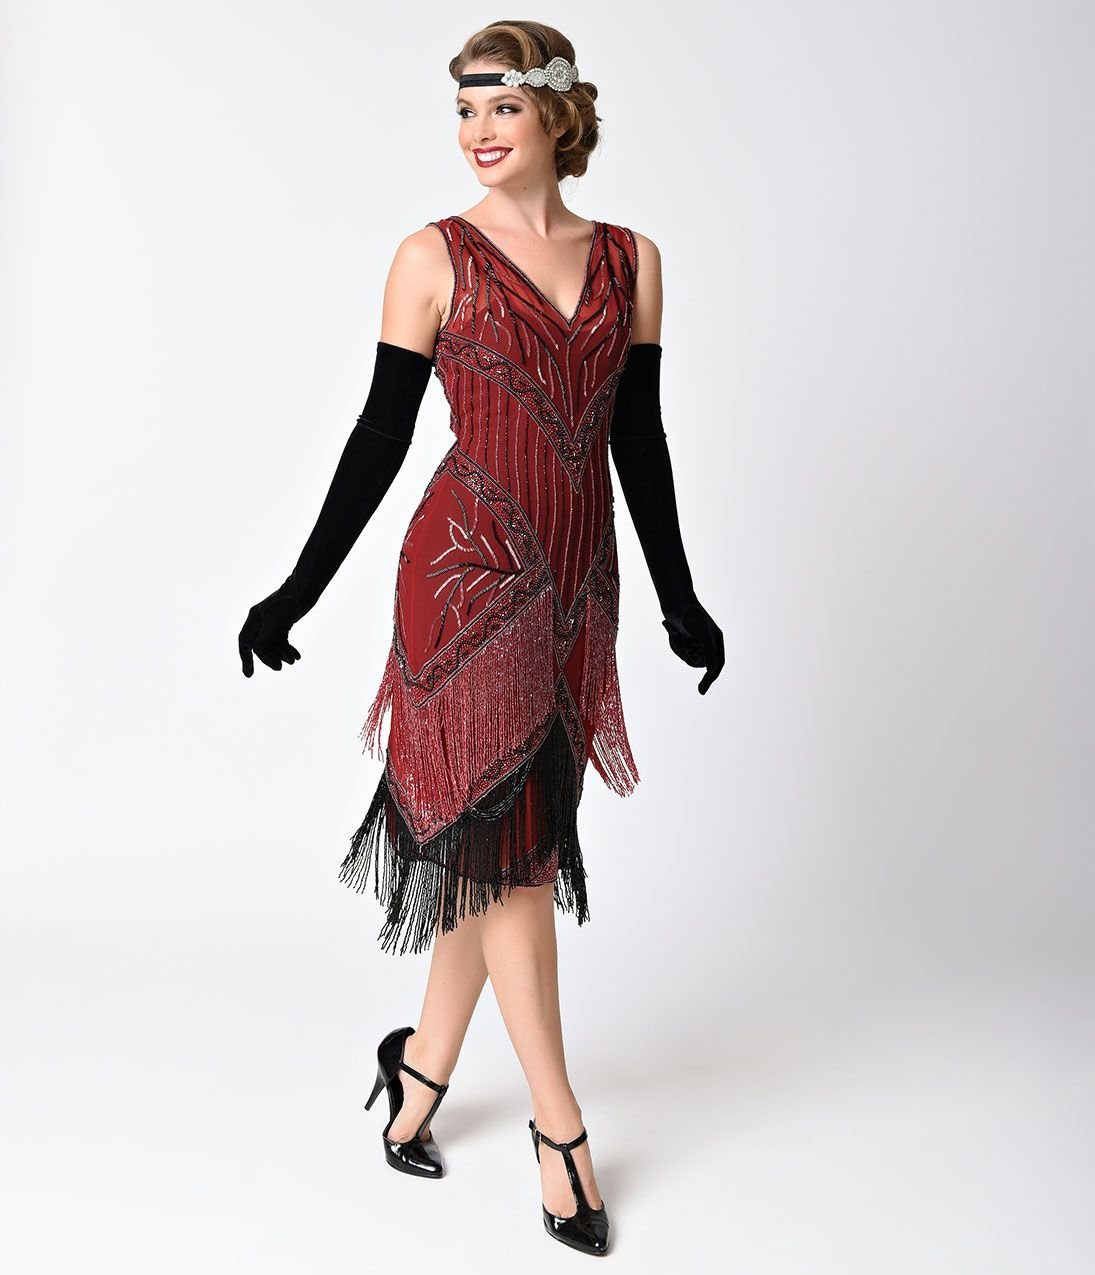 Мода 20х. Платье флэппер 1920. 20е годы мода Великий Гэтсби. Стиль Гэтсби Америка 20-х. Стиль Чикаго Великий Гэтсби.